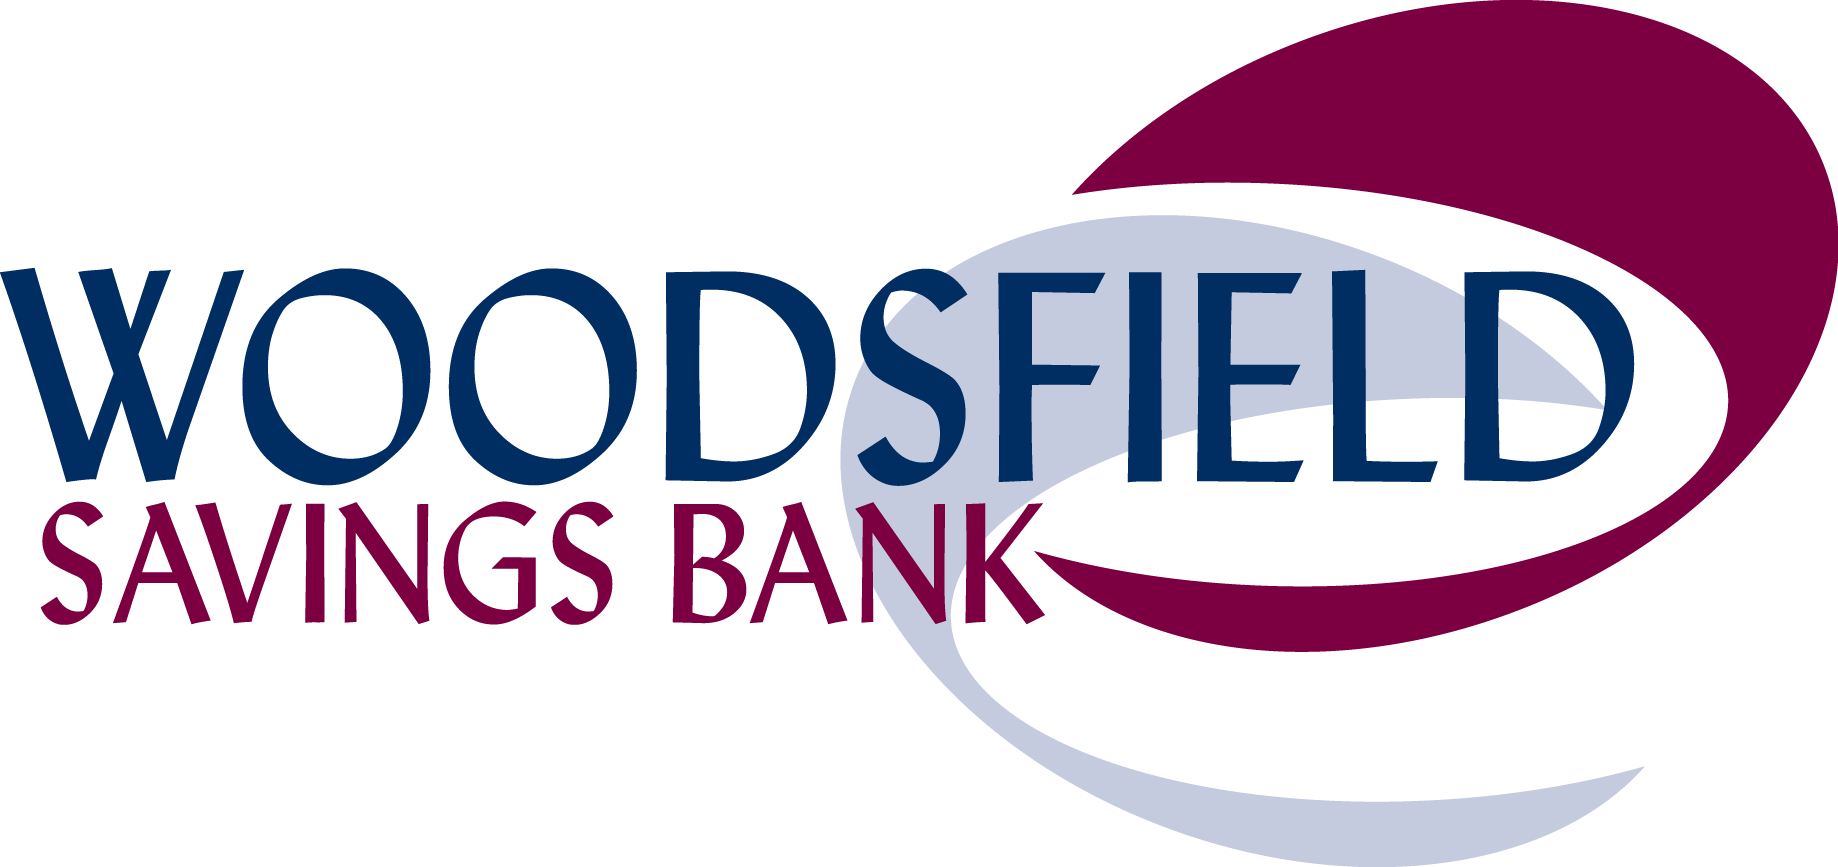 Woodsfield Savings Bank